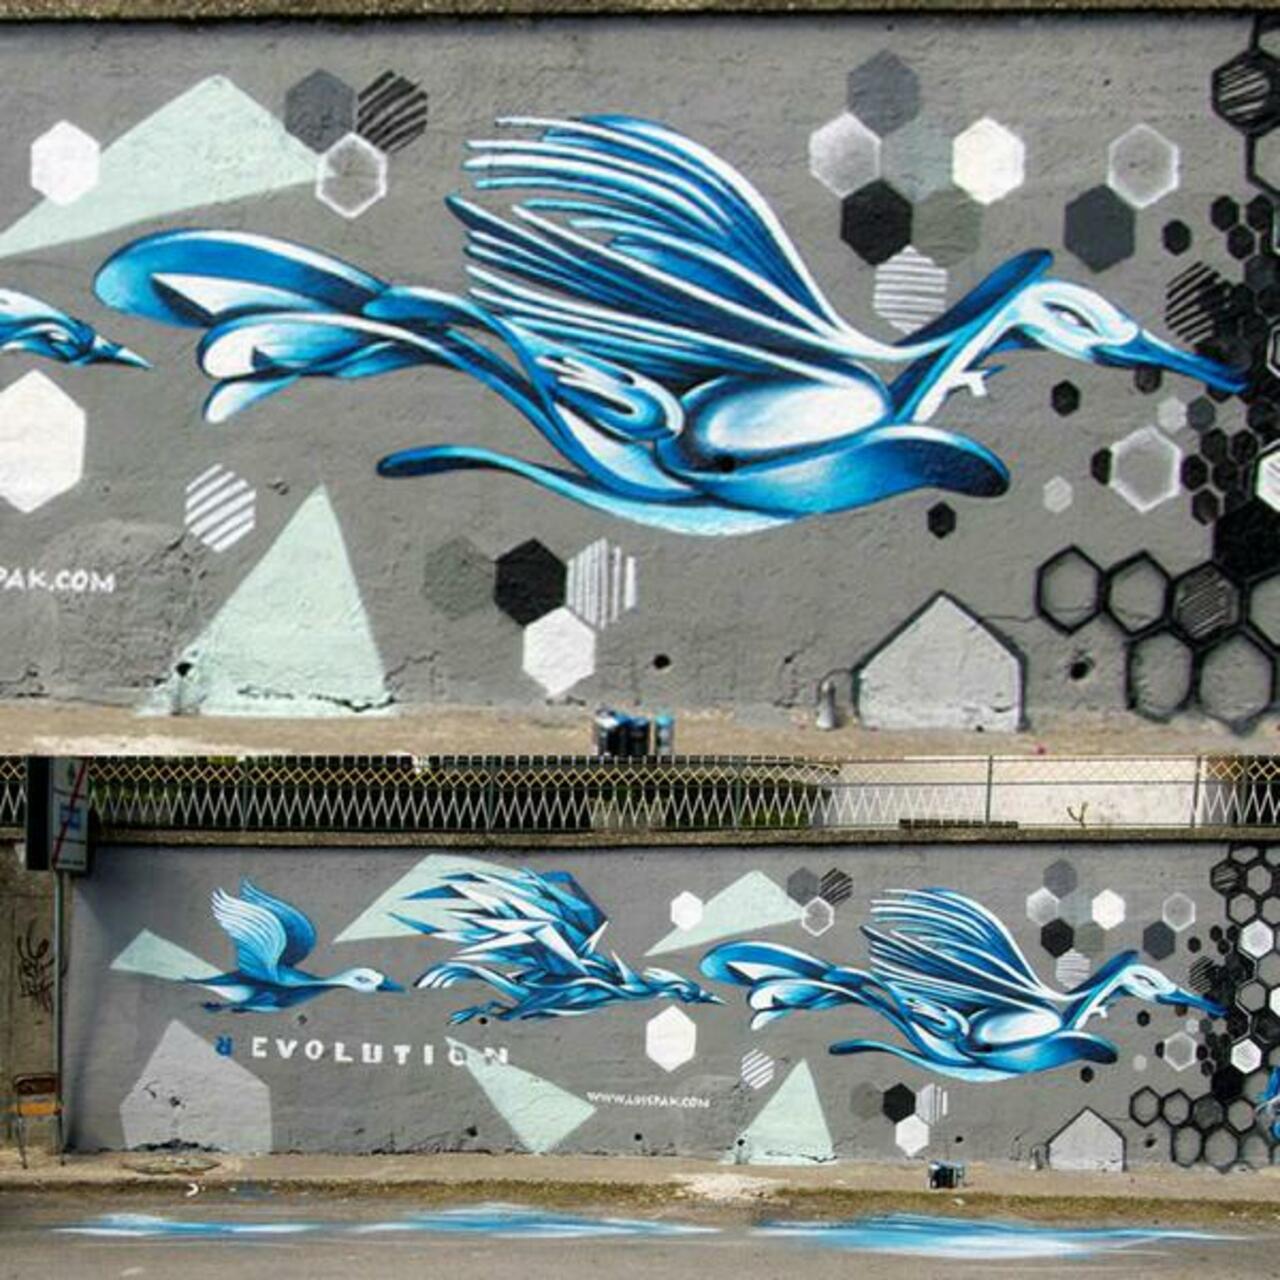 RT “@iIusionOptica: Vuela lejos.
Artista: LuisPak
Italia
#art #streetart #mural #graffiti http://t.co/PGwBt7oRMy”